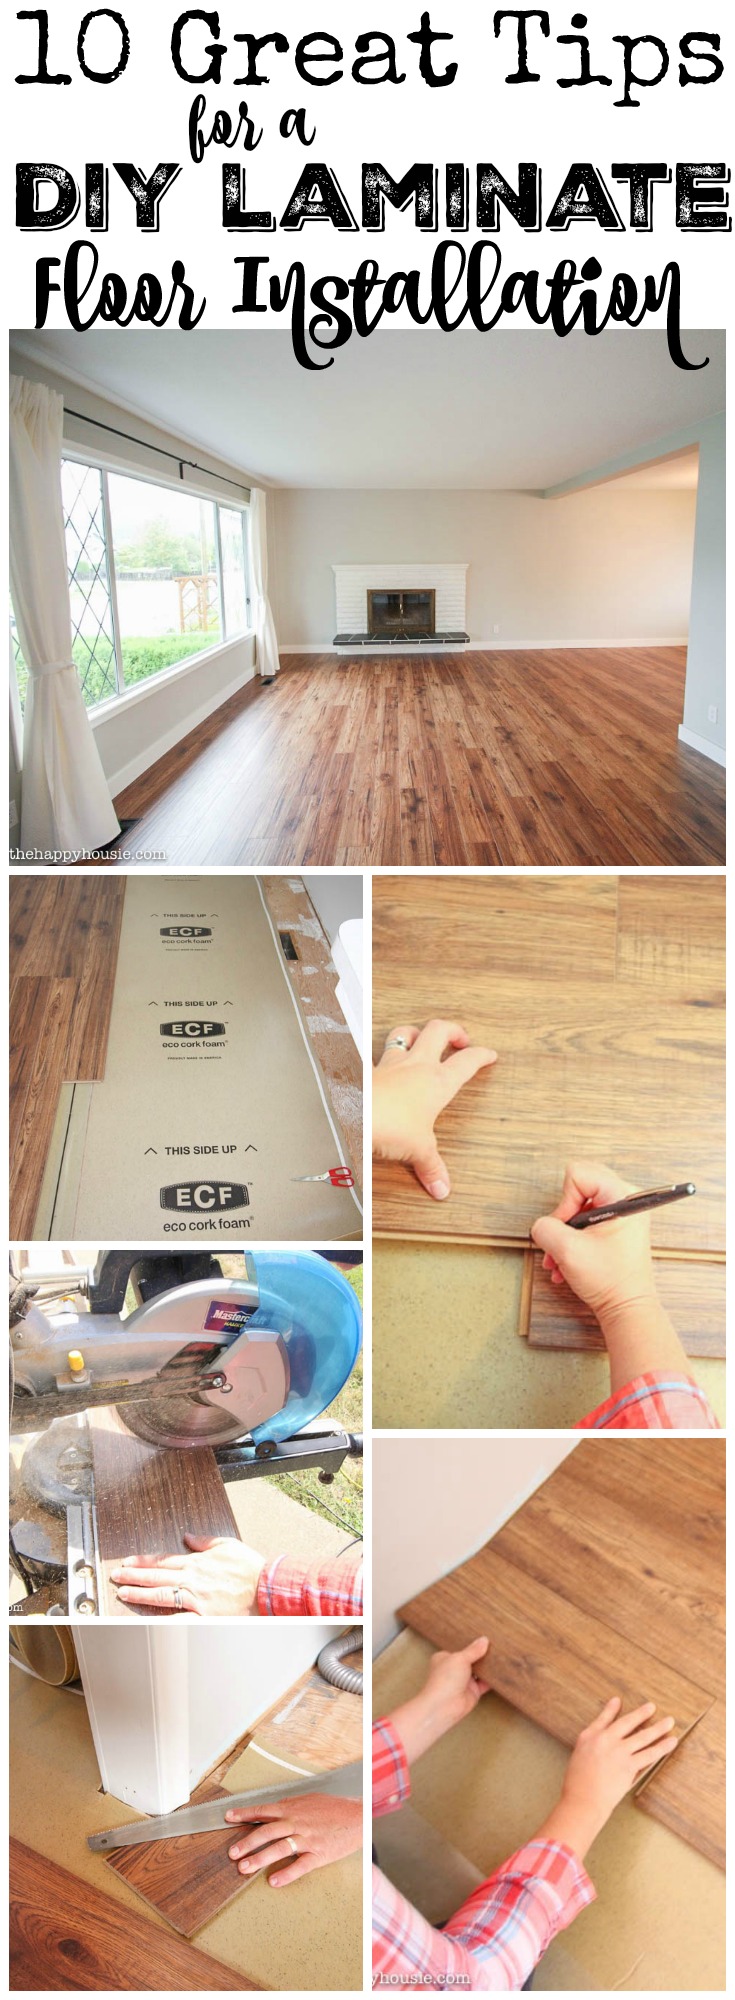 Diy Laminate Flooring Installation, Instructions On Laying Laminate Flooring